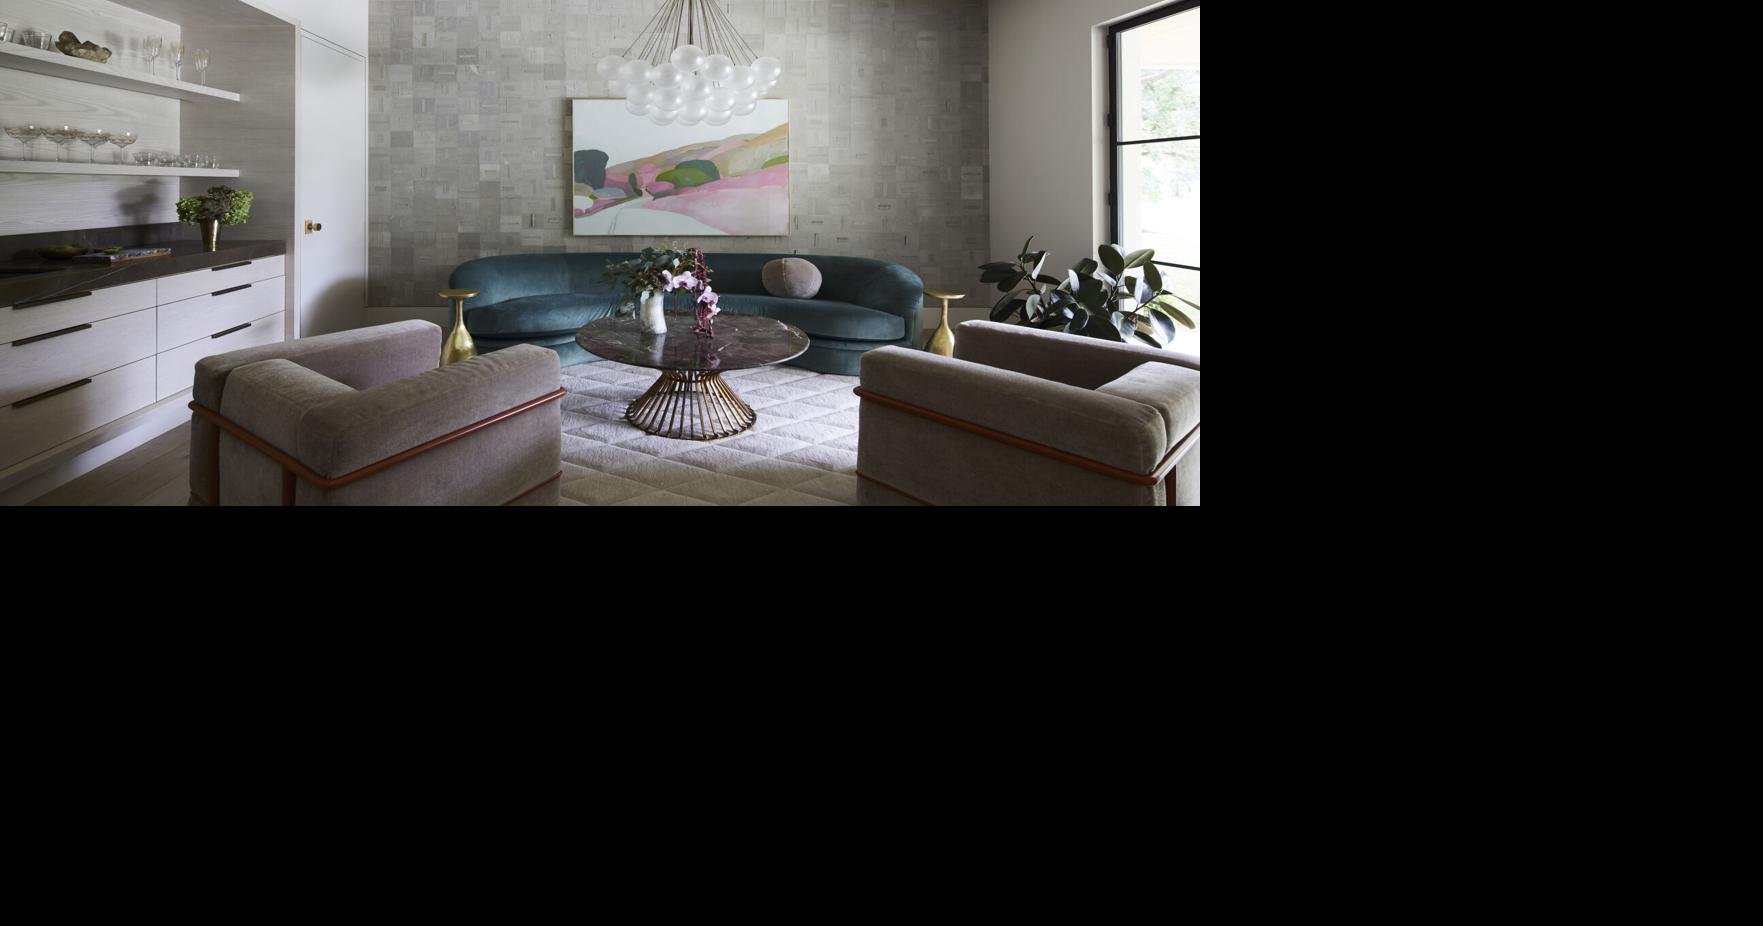 Tulsa interior designer uses psychotherapy background to create calm, rejuvenating spaces | Home & Garden